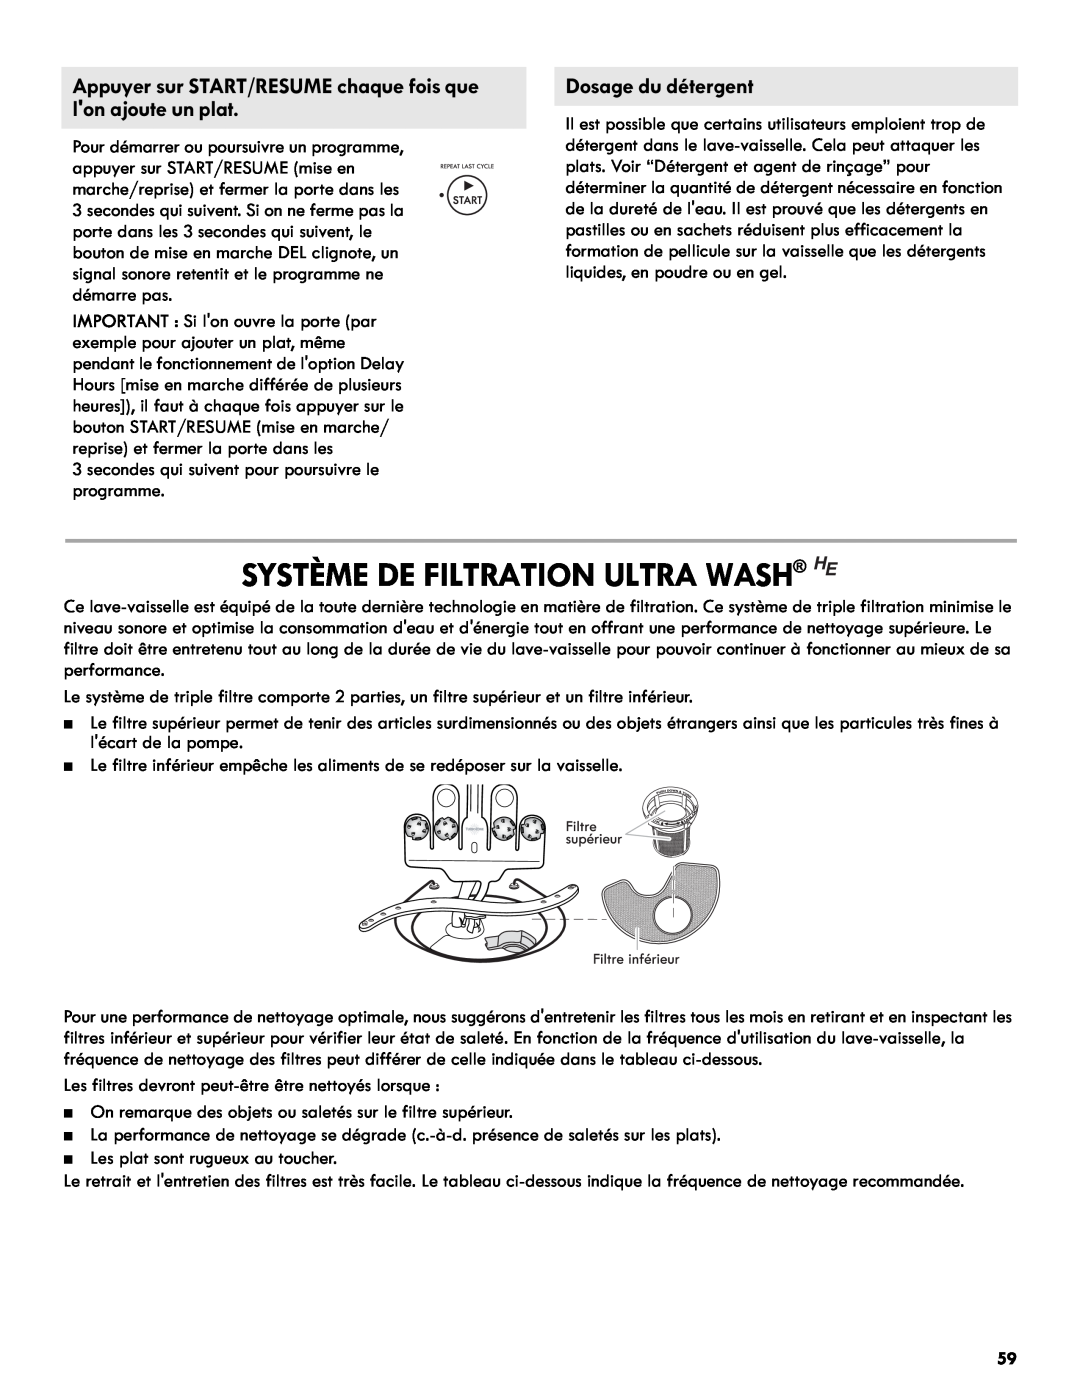 Kenmore 665.1327 manual Système De Filtration Ultra Wash He, Dosage du détergent 